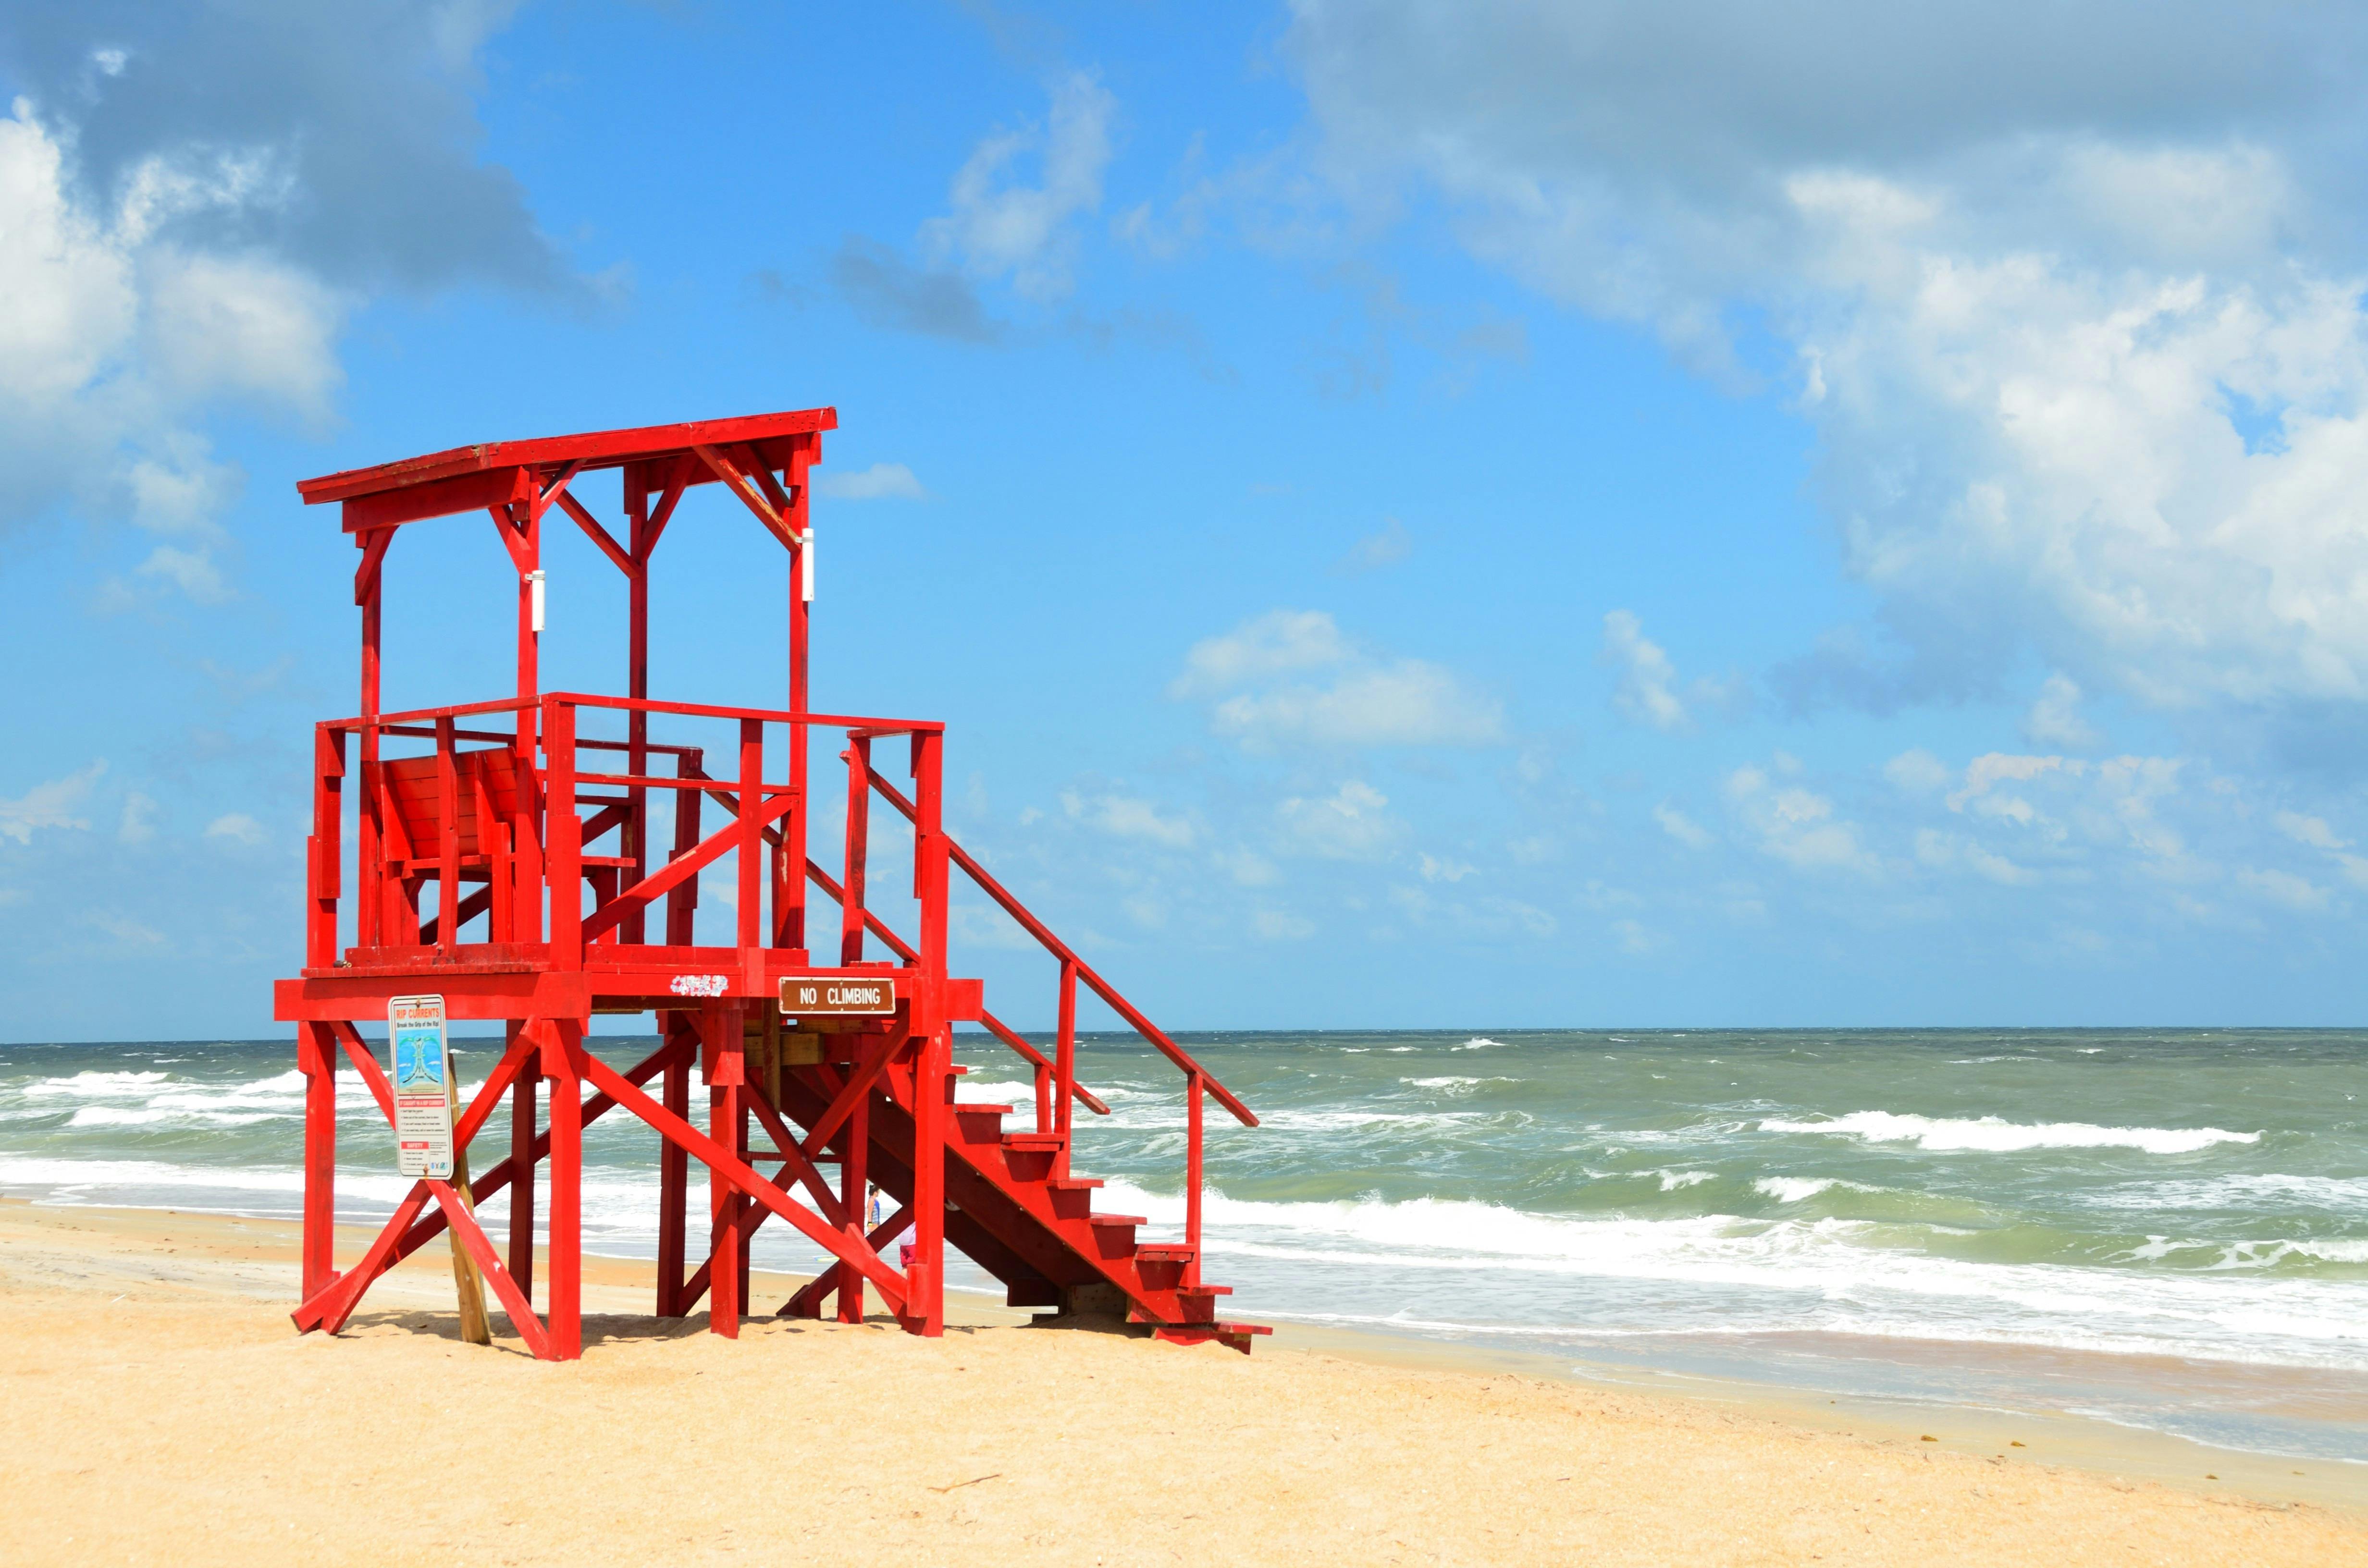 iPhone Wallpaper Cancun Lifeguard Stand | Iphone wallpaper, Lifeguard  stands, Lifeguard